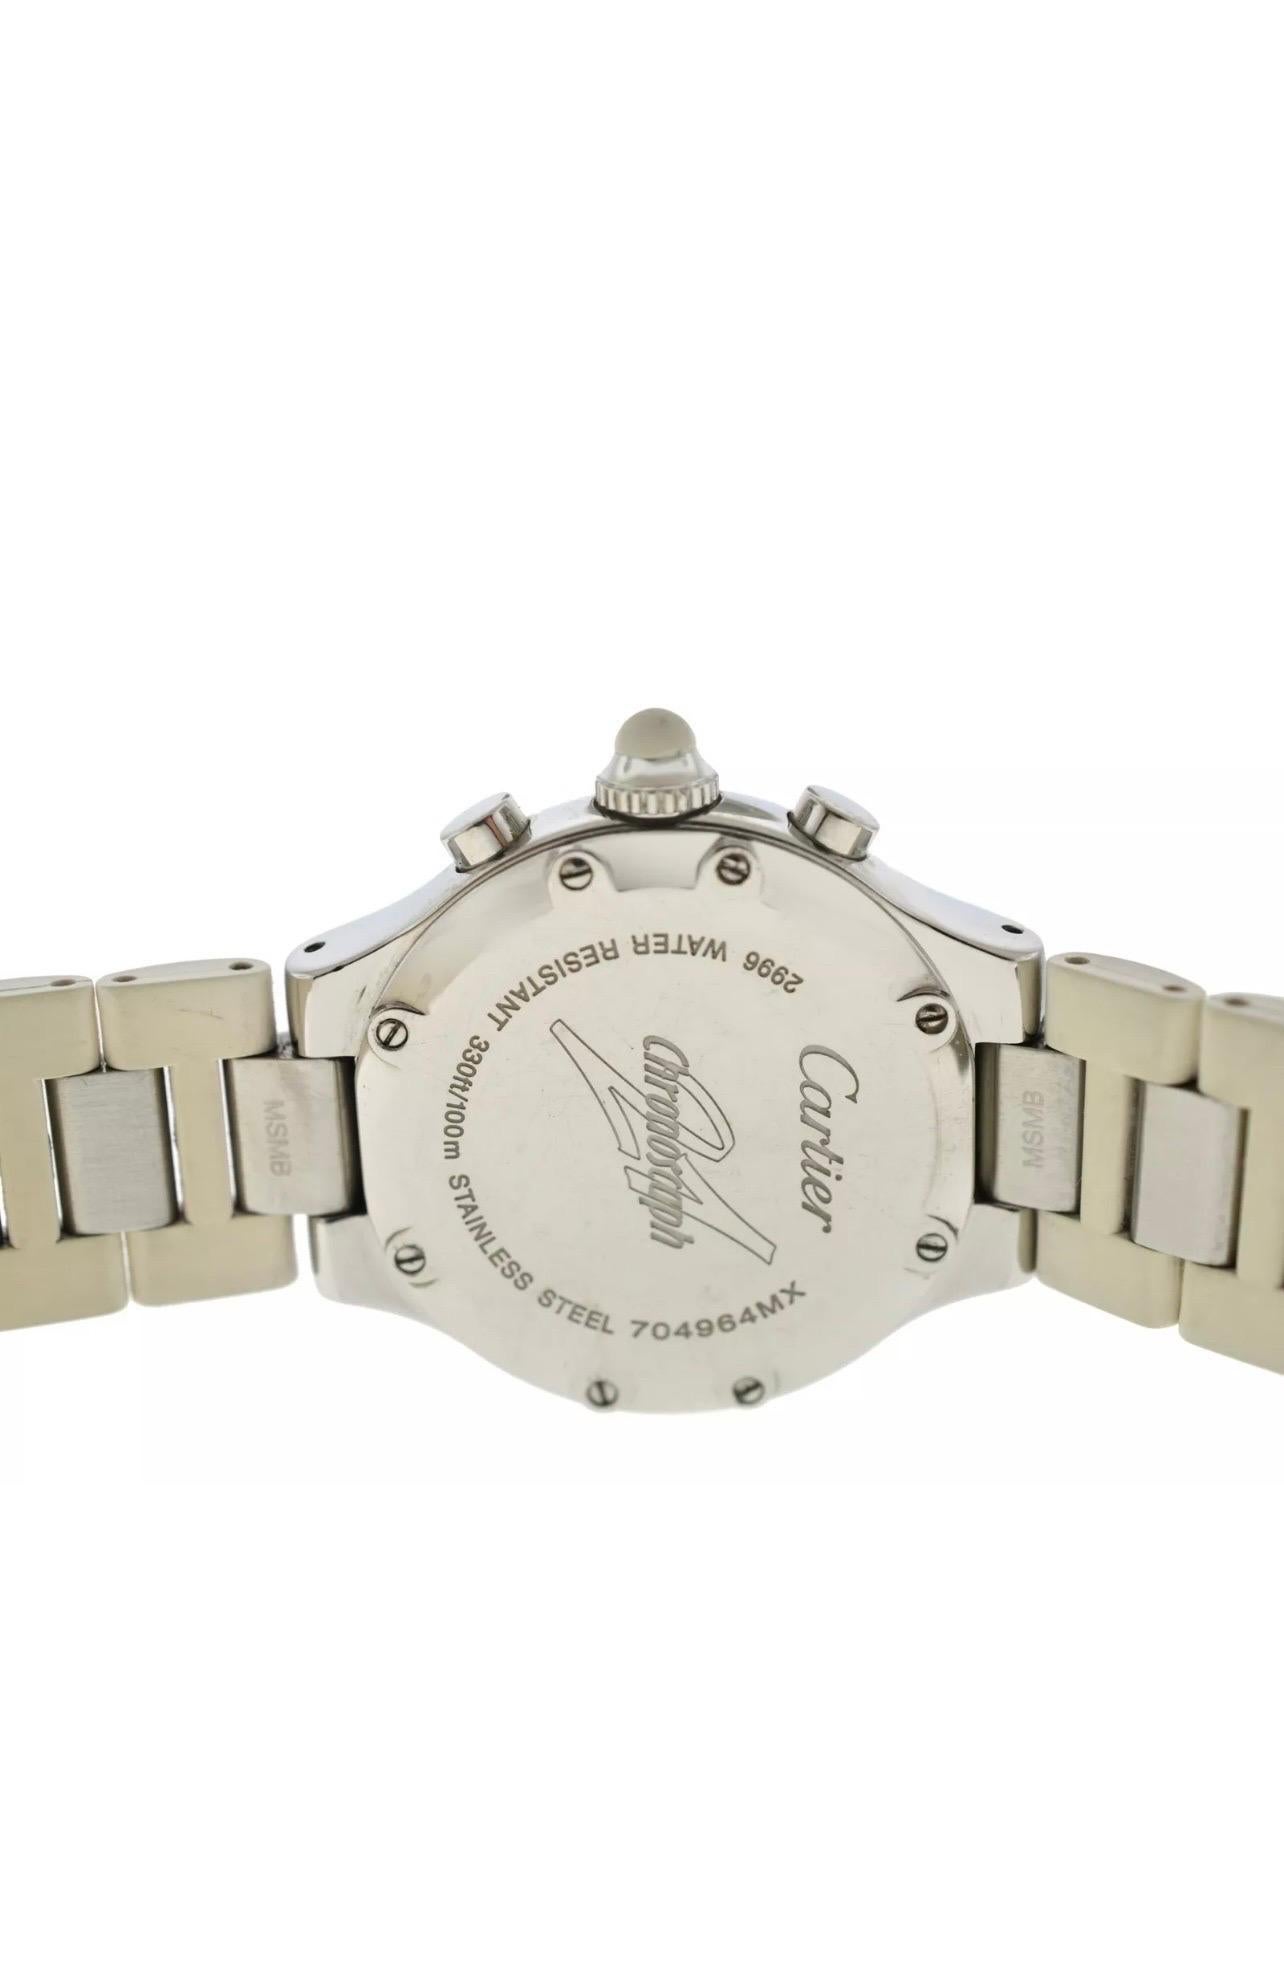 Cartier Chronoscaph Cream Women's Rubber Strap Watch, 2996 For Sale 7